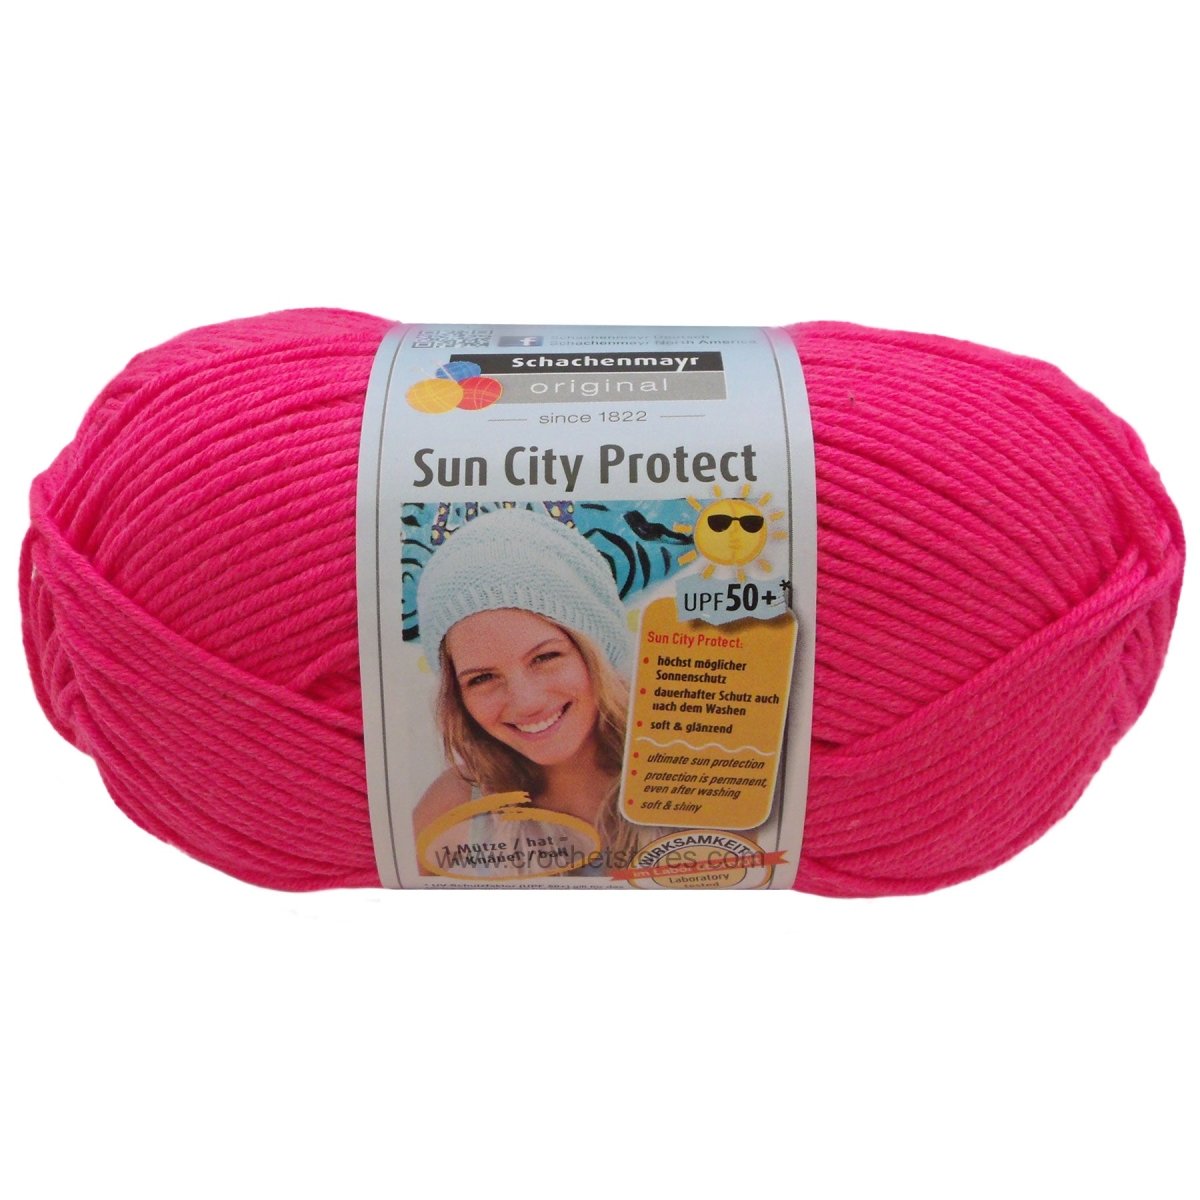 SUN CITY PROTECT - Crochetstores9807778-4354053859018869